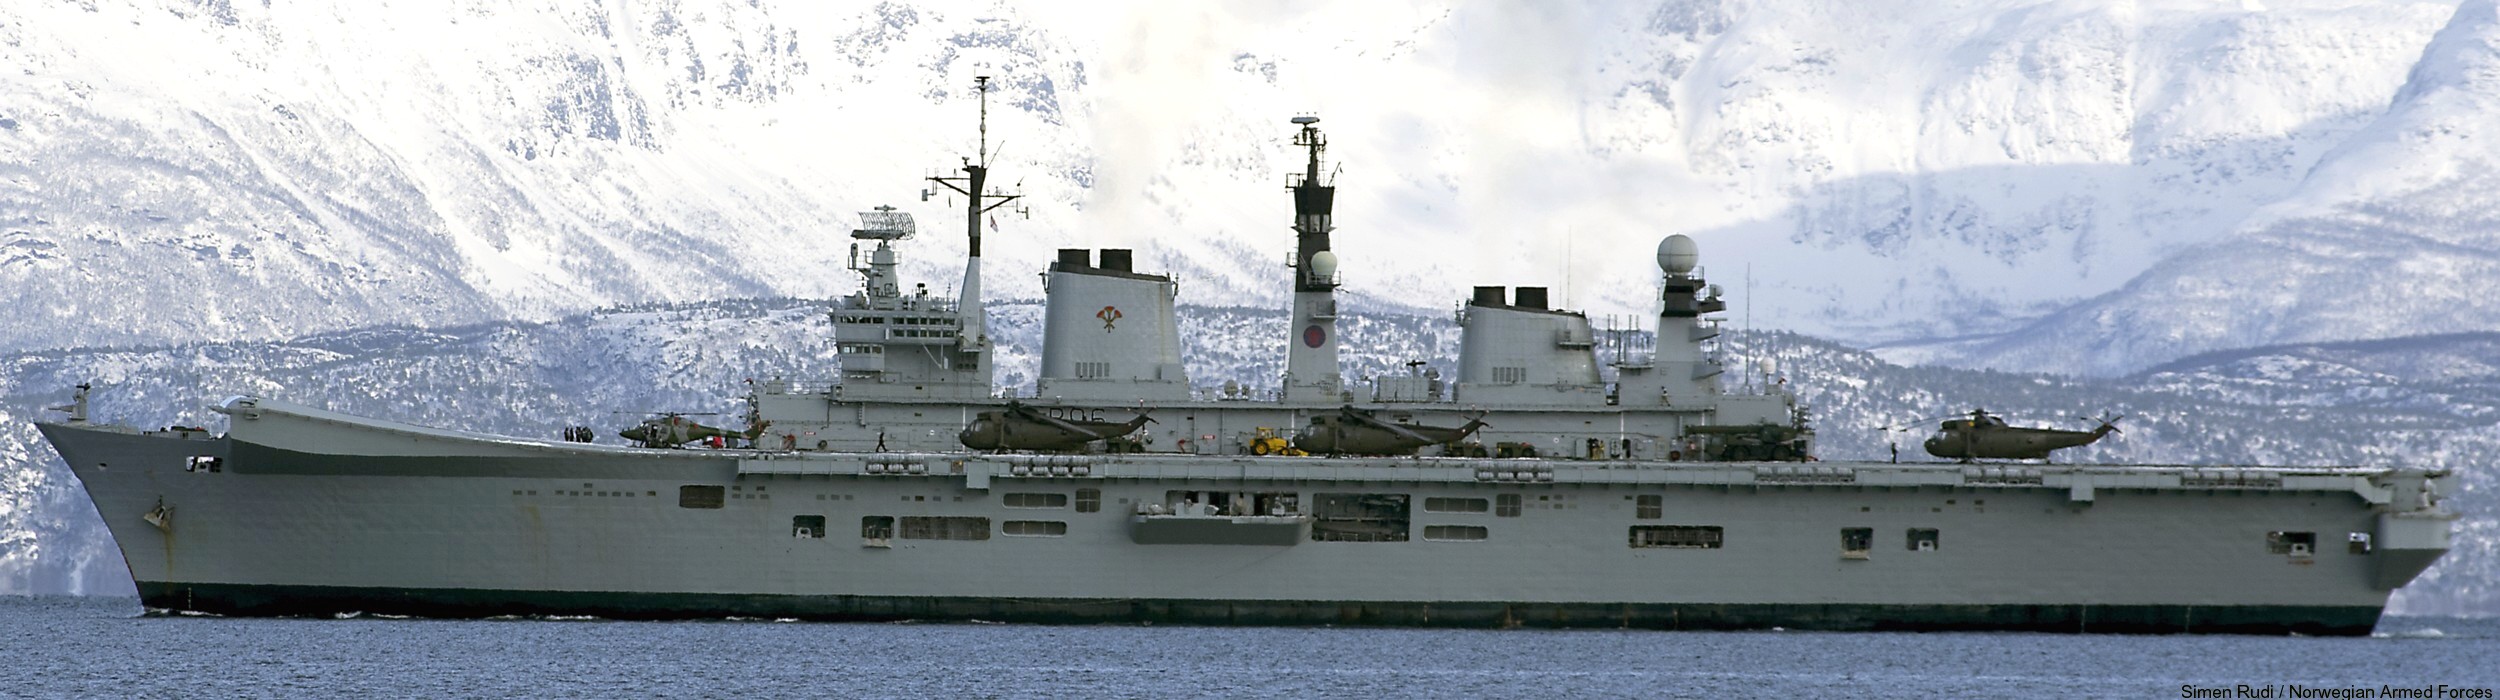 r-06 hms illustrious r06 invincible class aircraft carrier stovl royal navy 64